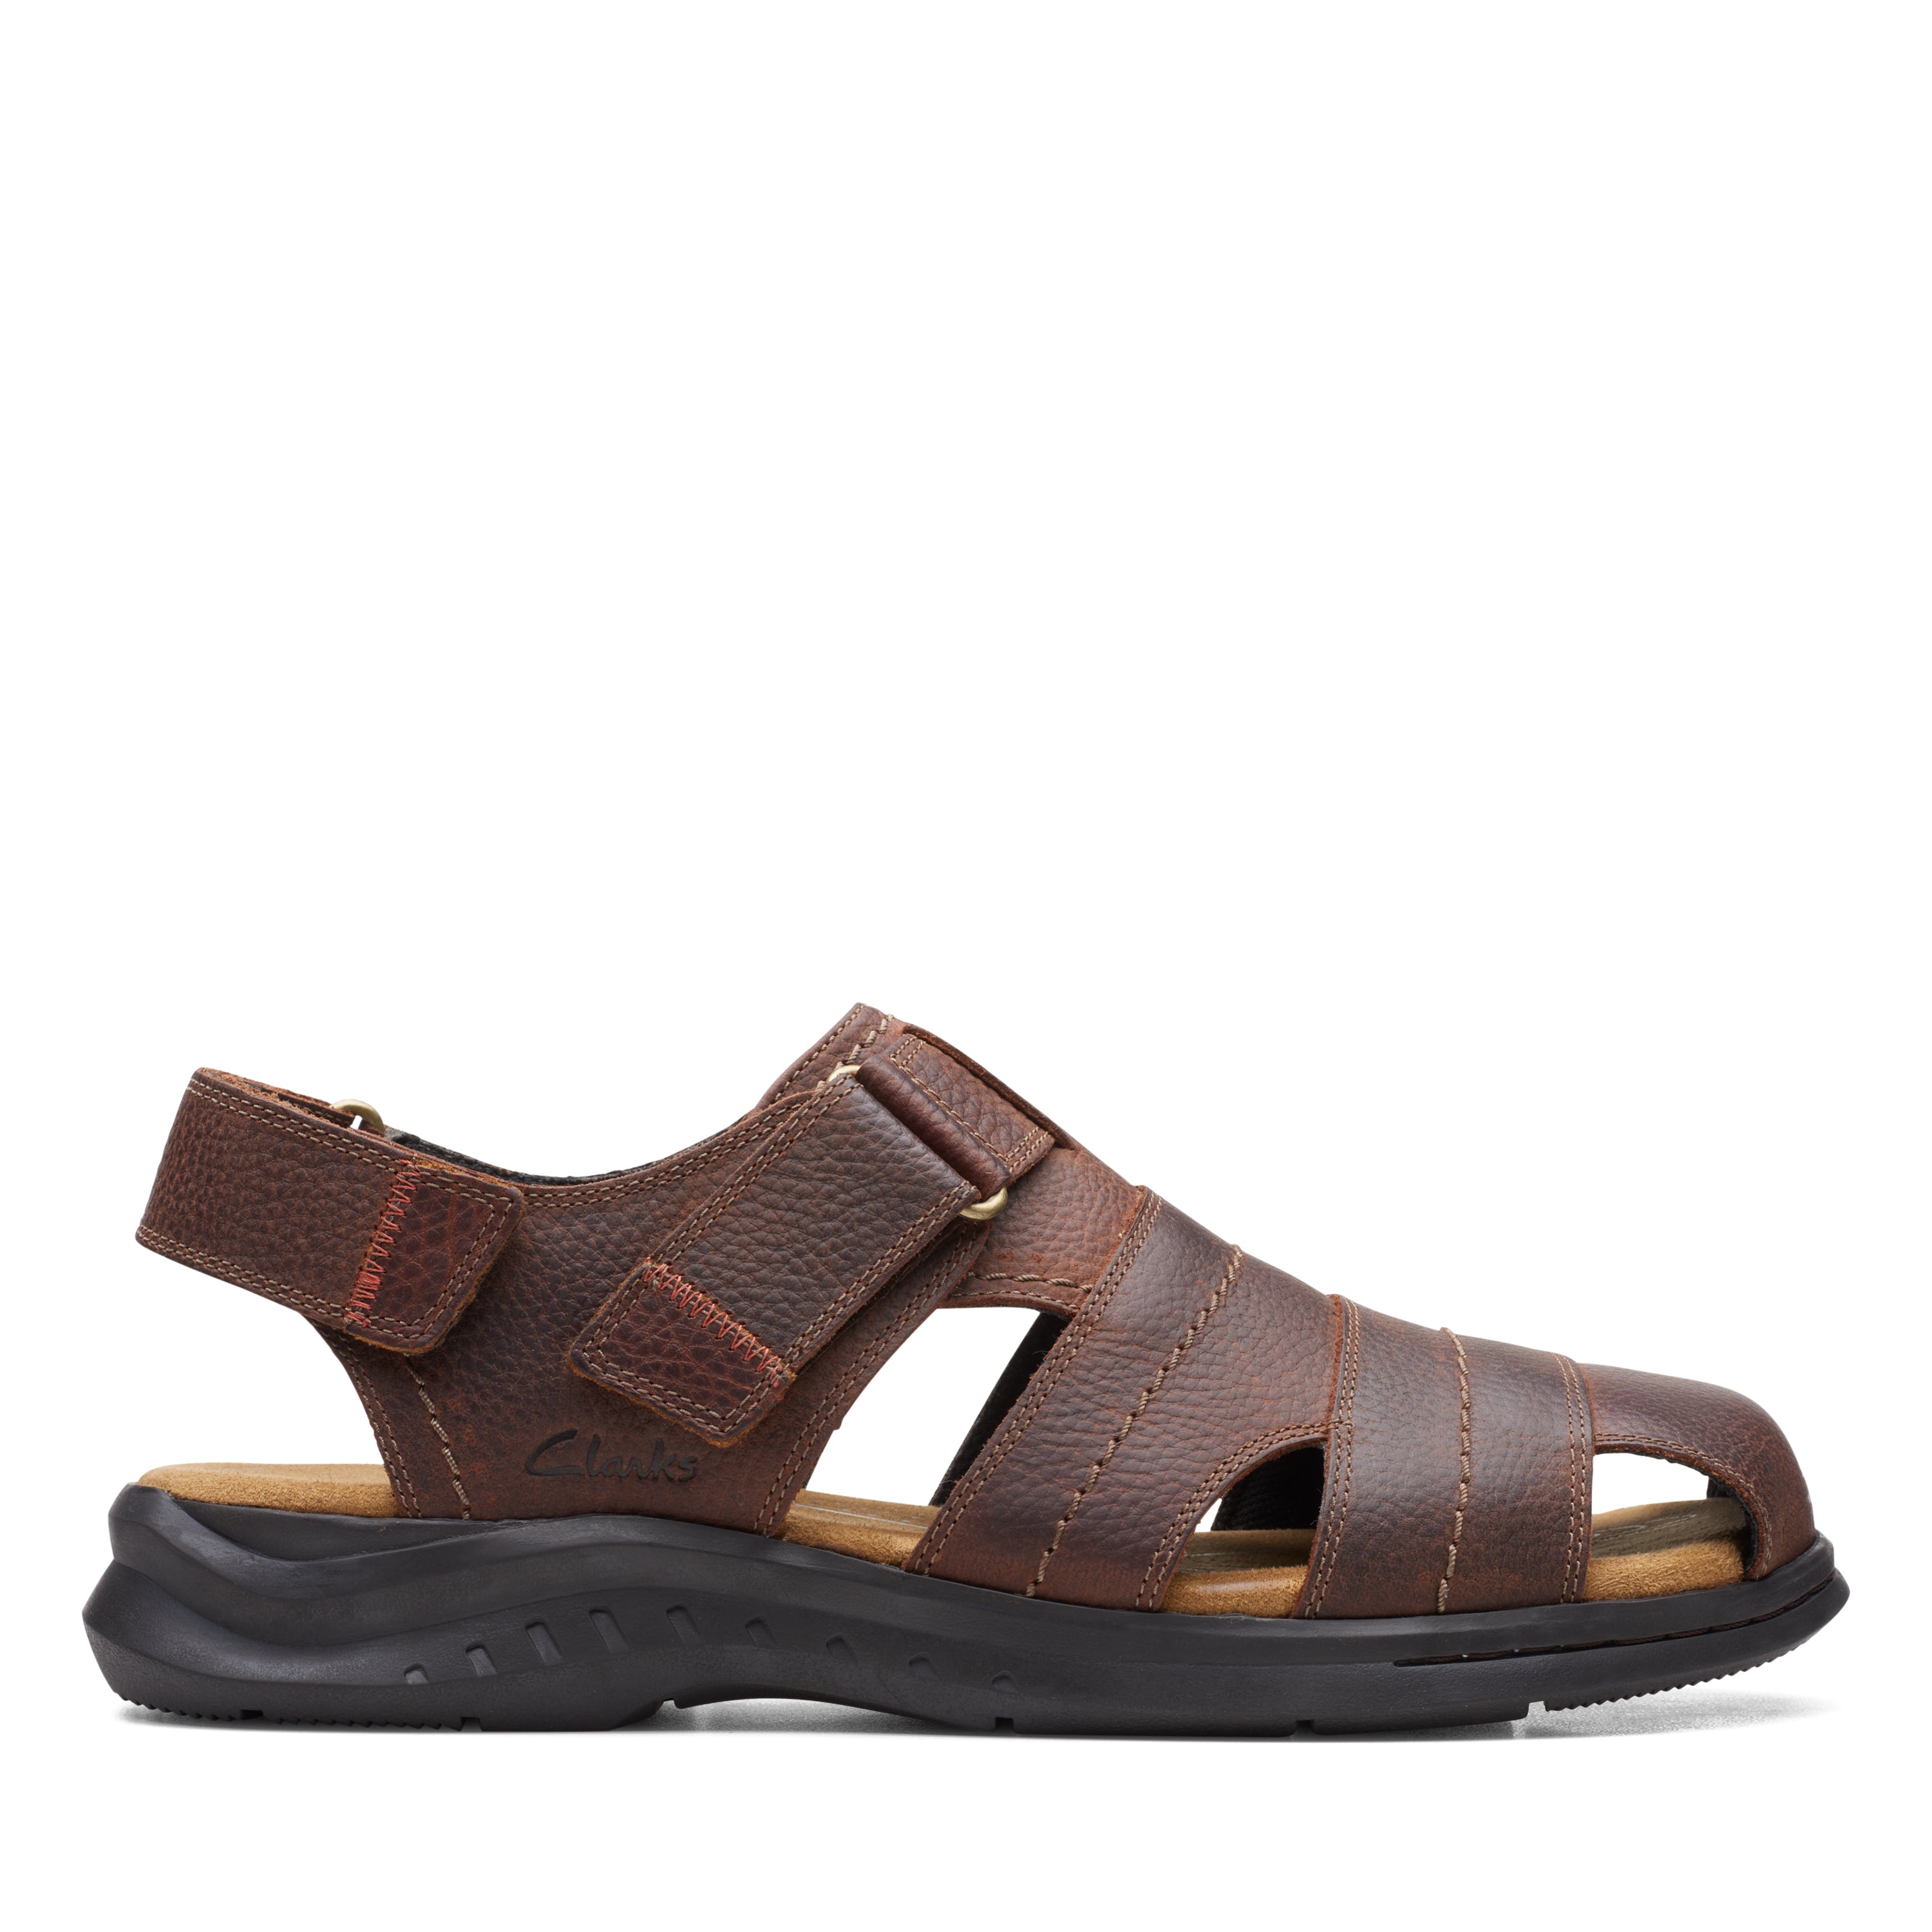 Shop Men's Clarks Sandals up to 70% Off | DealDoodle